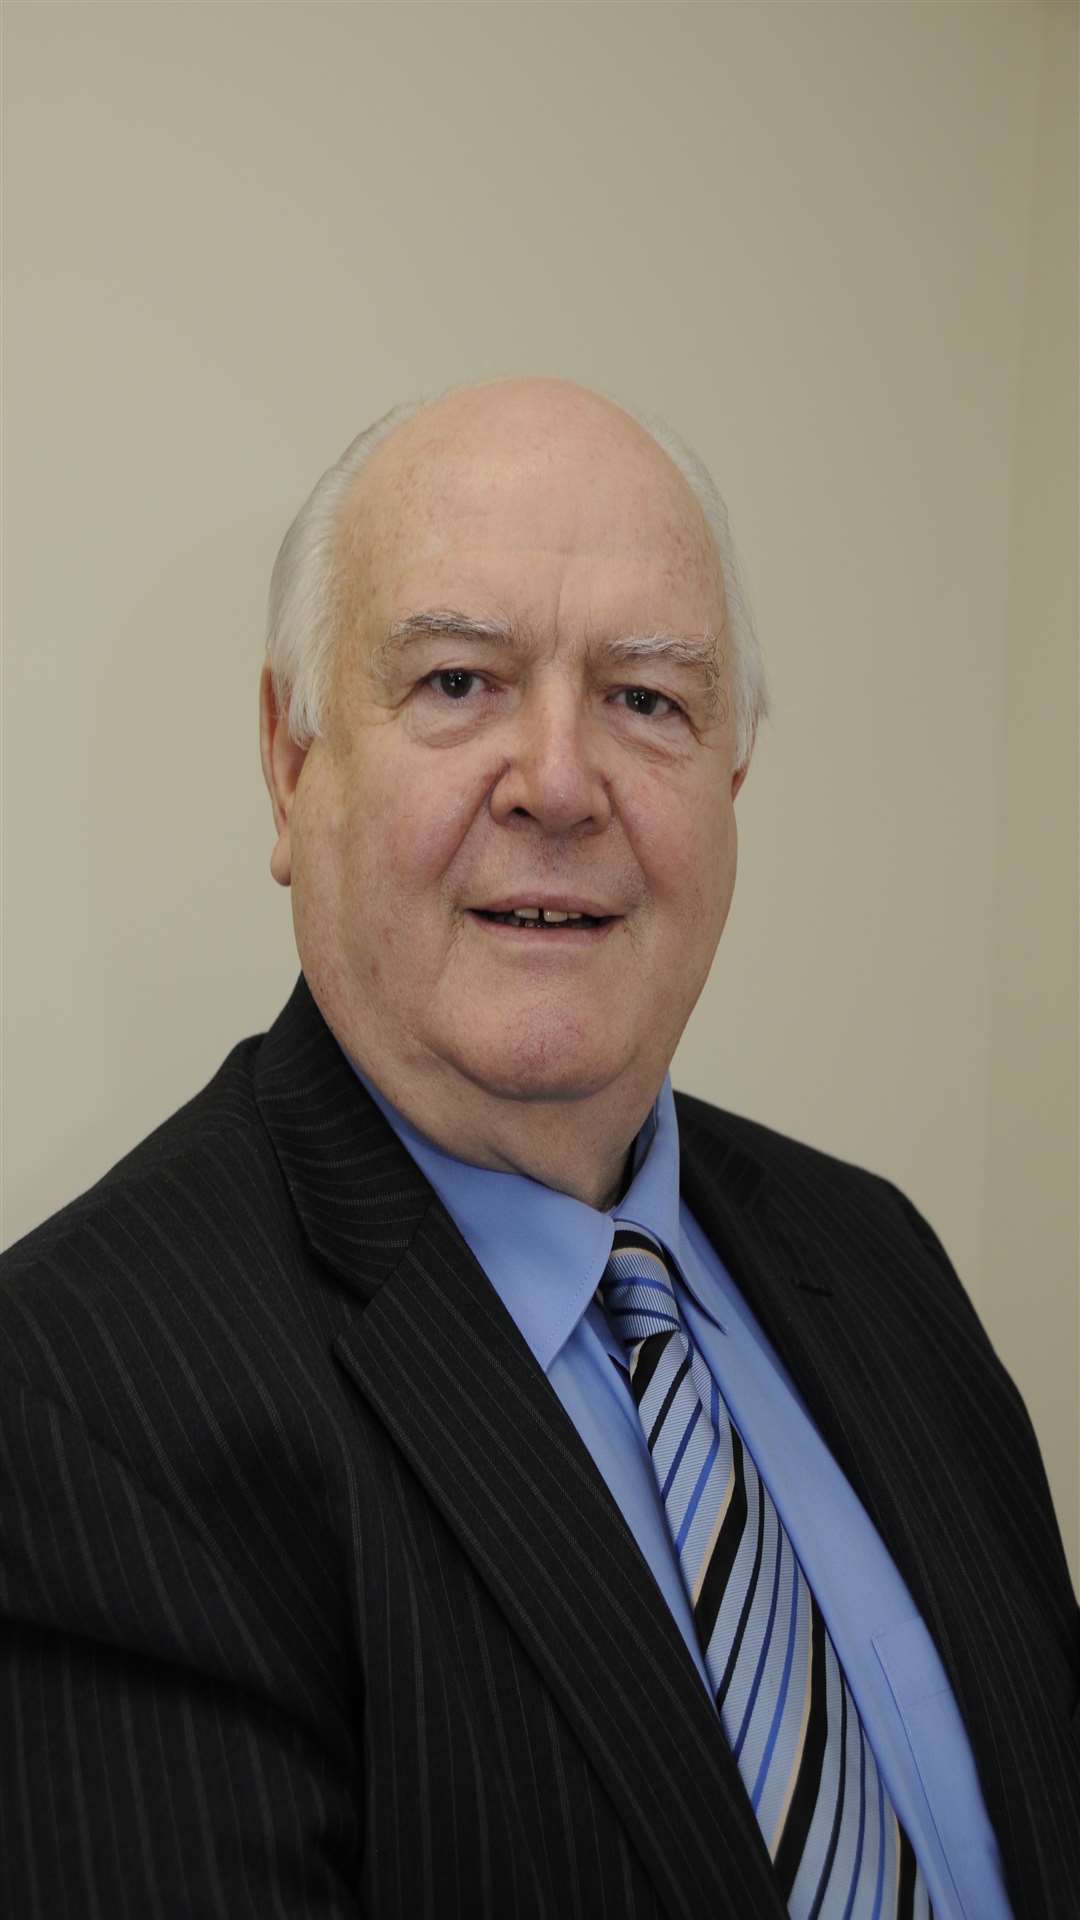 Ashford Council leader Cllr Gerry Clarkson